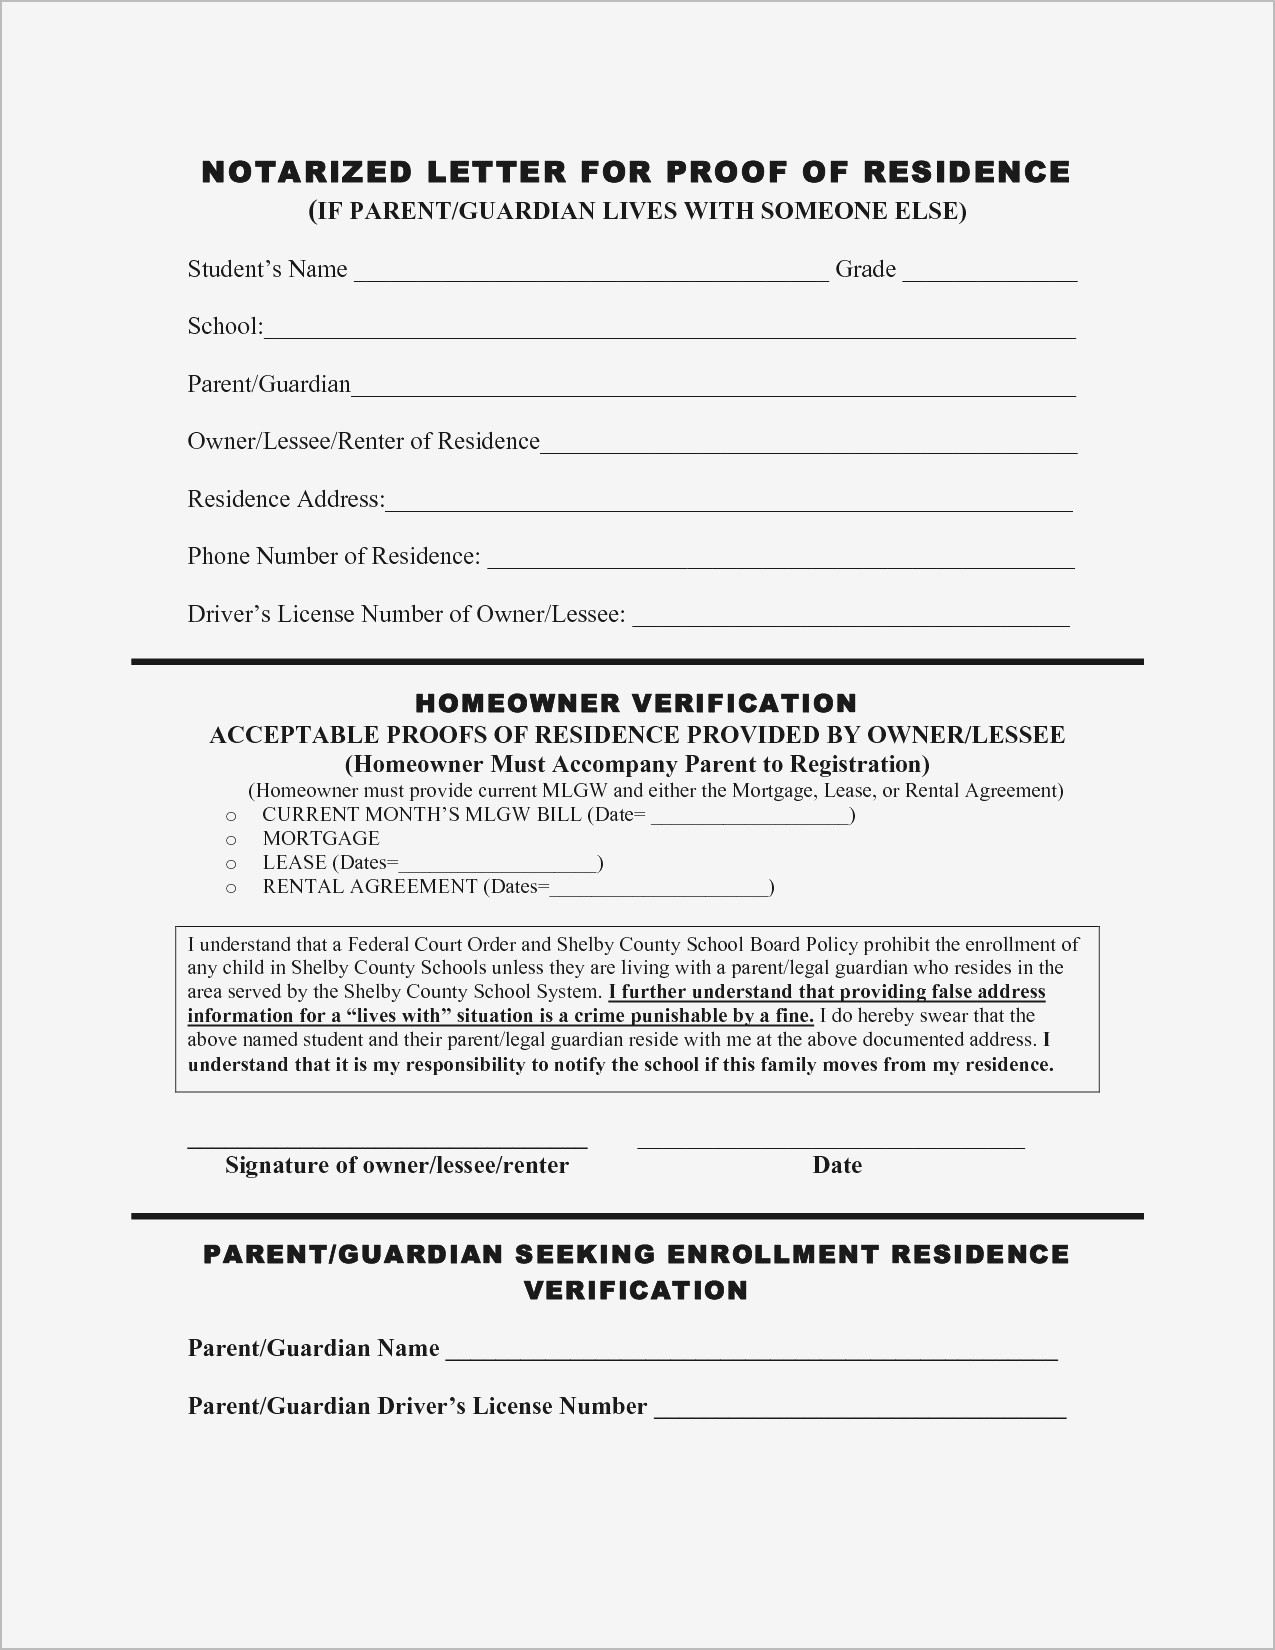 notarized legal guardianship letter